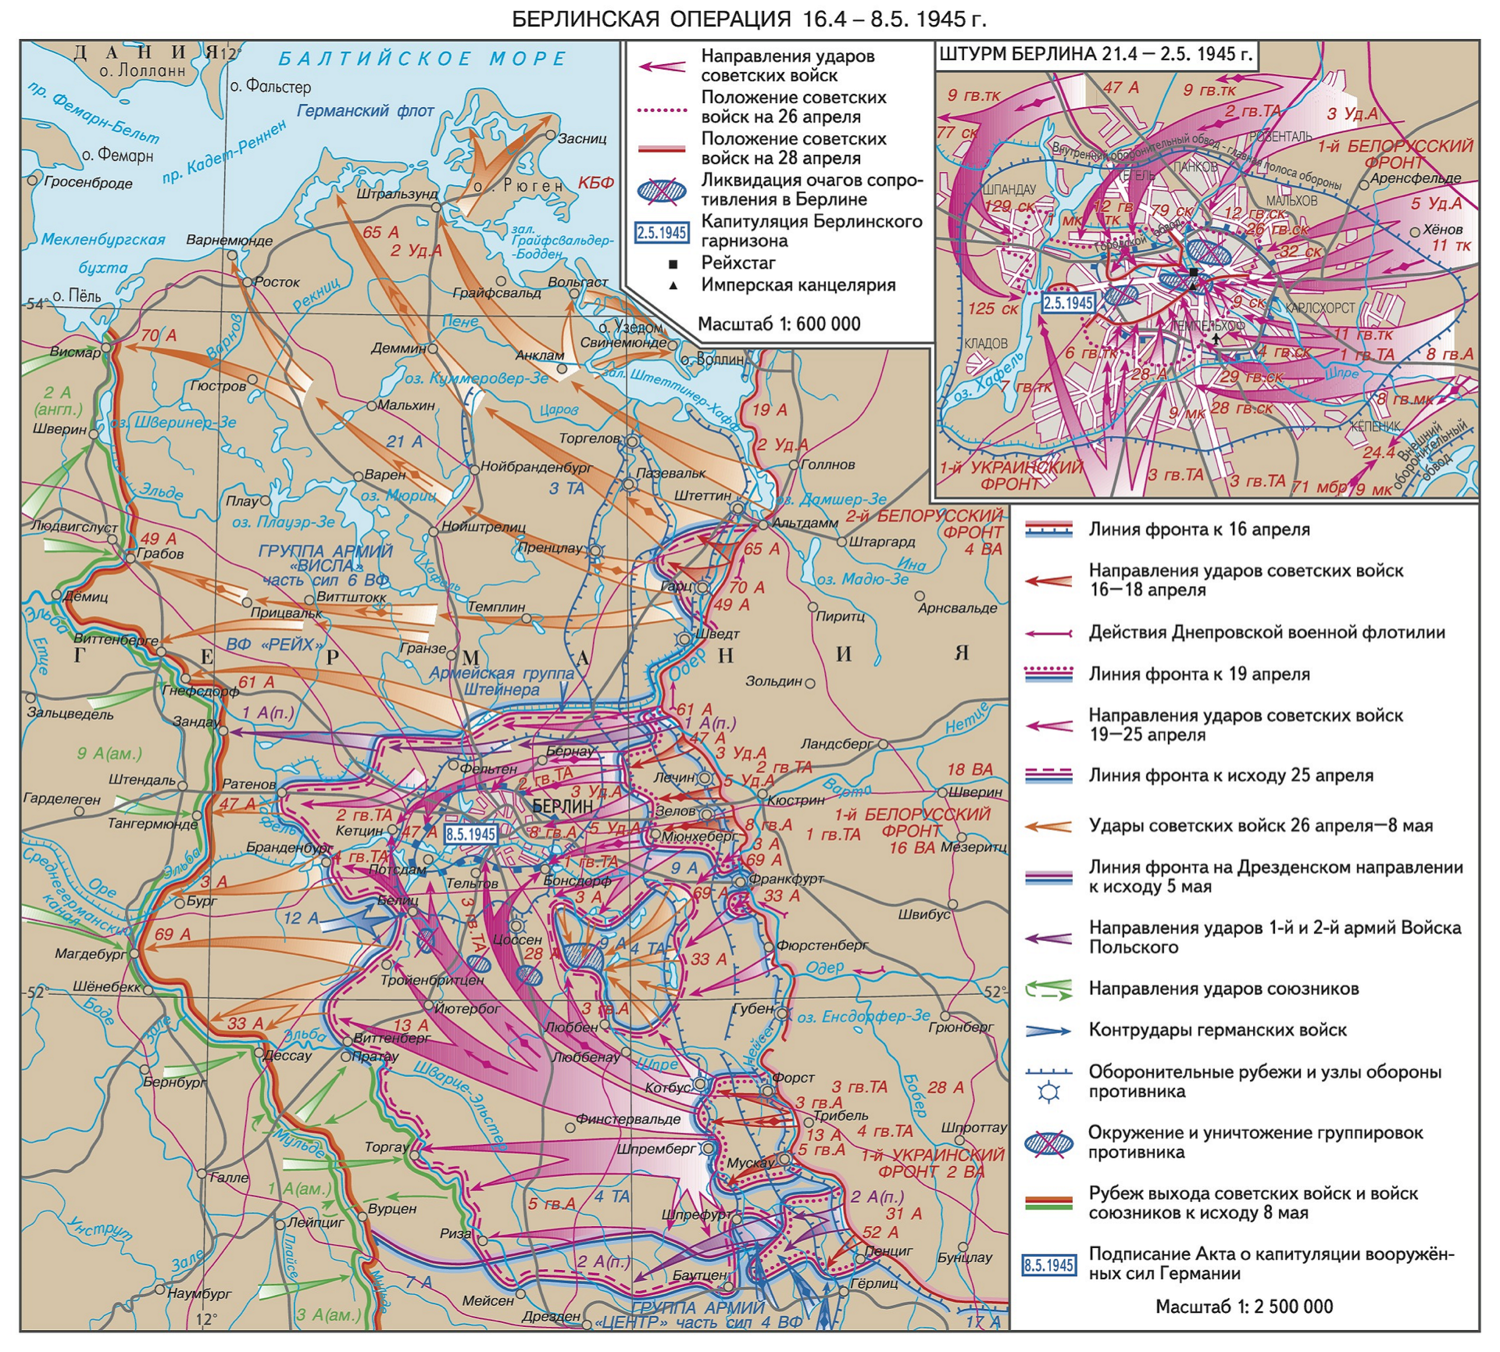 Берлинская операция 1945 г карта. Операция Берлин 1945 карта. Карта Берлинской операции 1945 года. Карта Берлинской операции 16 апреля- 8 мая 1945. 16 апреля берлинская операция